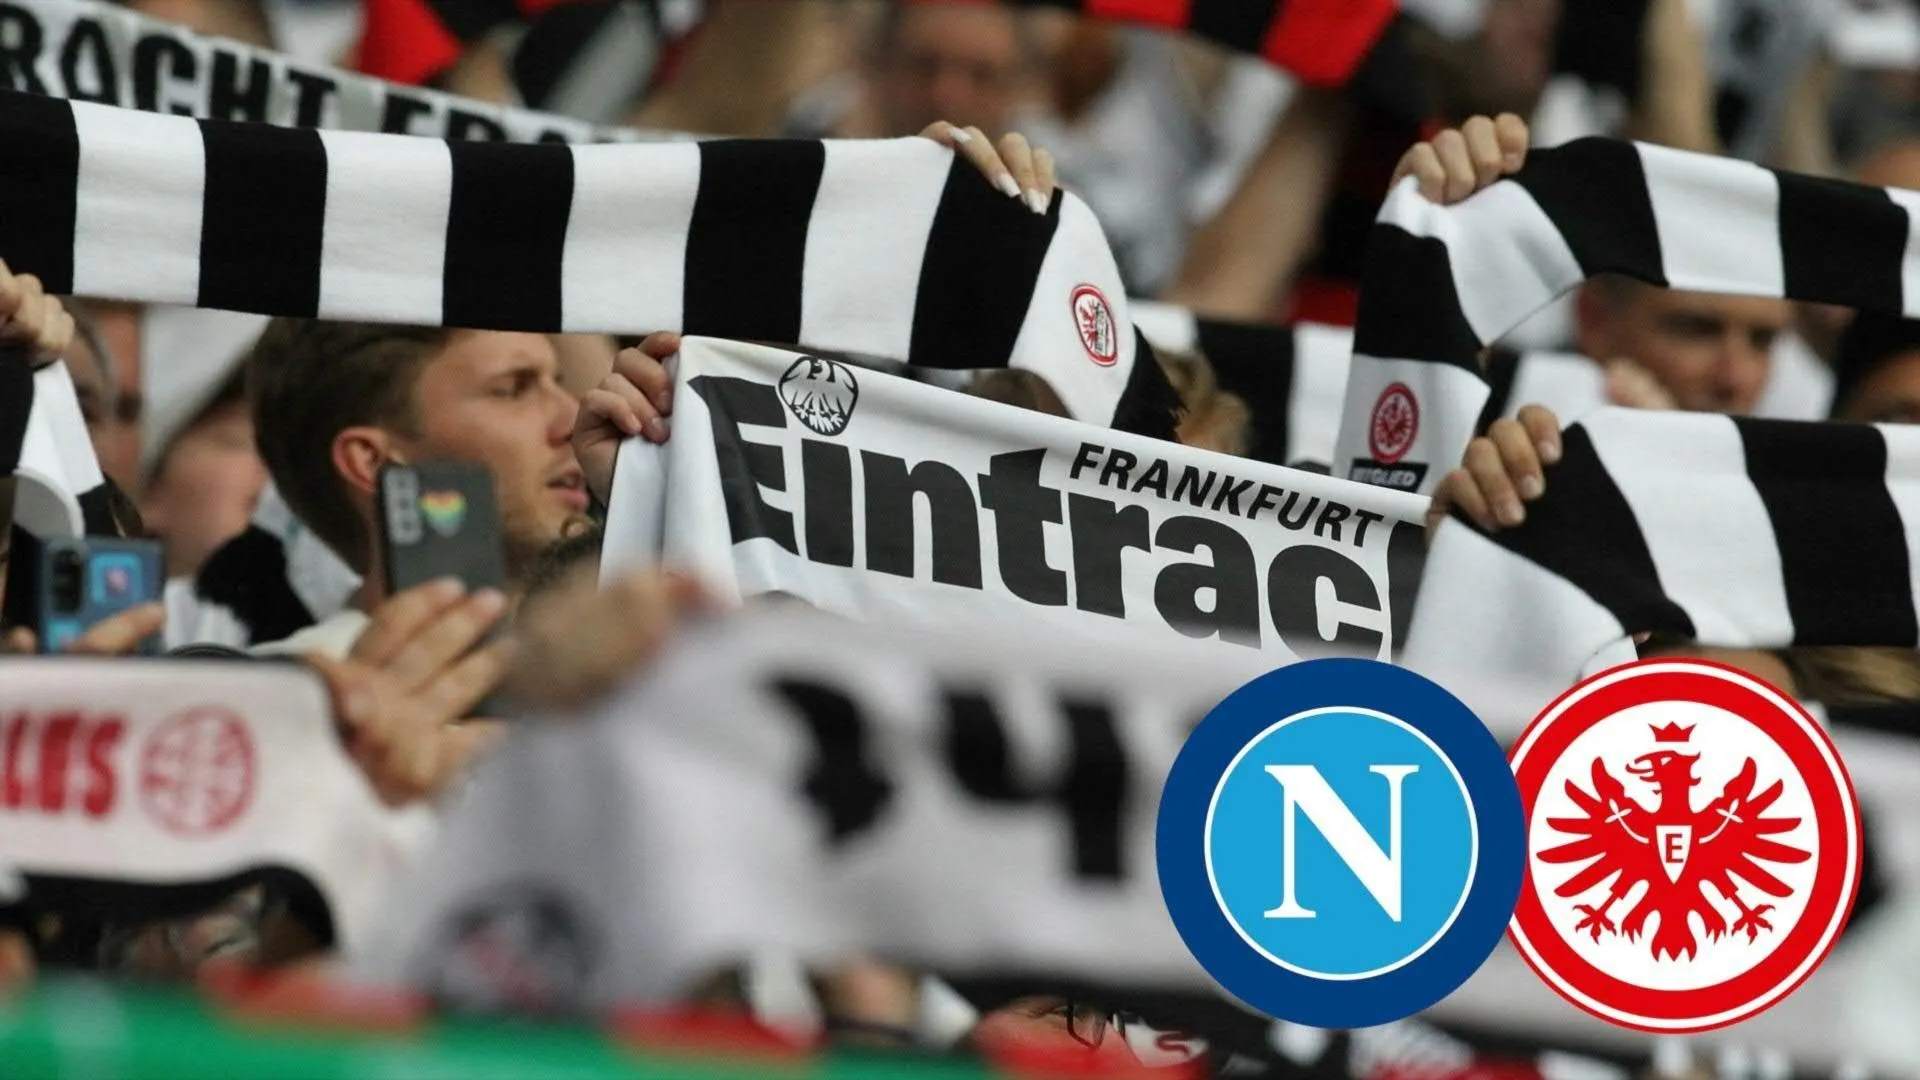 Security concerns: probably no Frankfurt fans in Naples